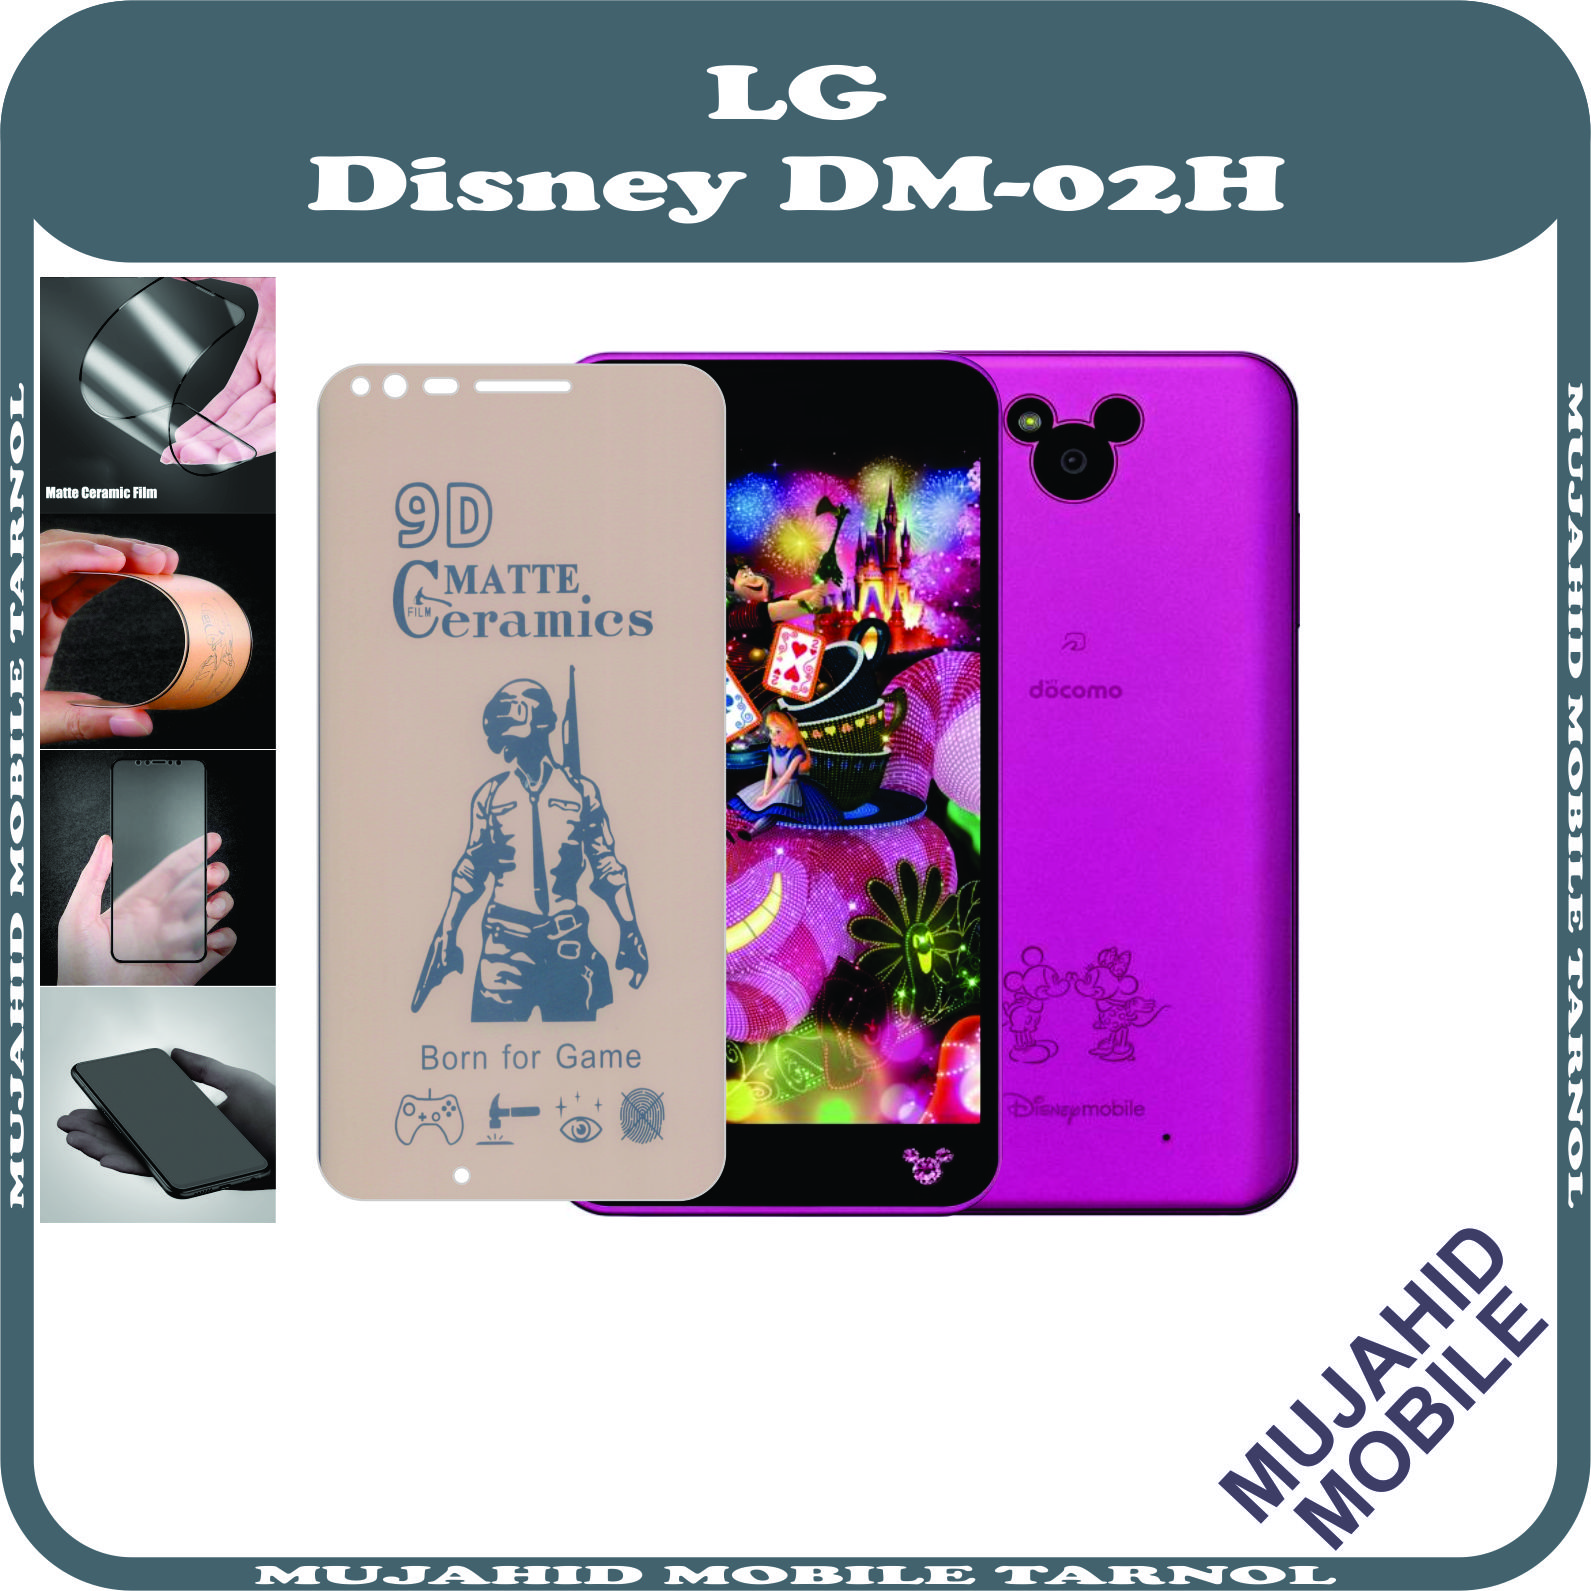 LG Disney (Docomo DM-02H) Matte Ceramic Flexible Unbreakable